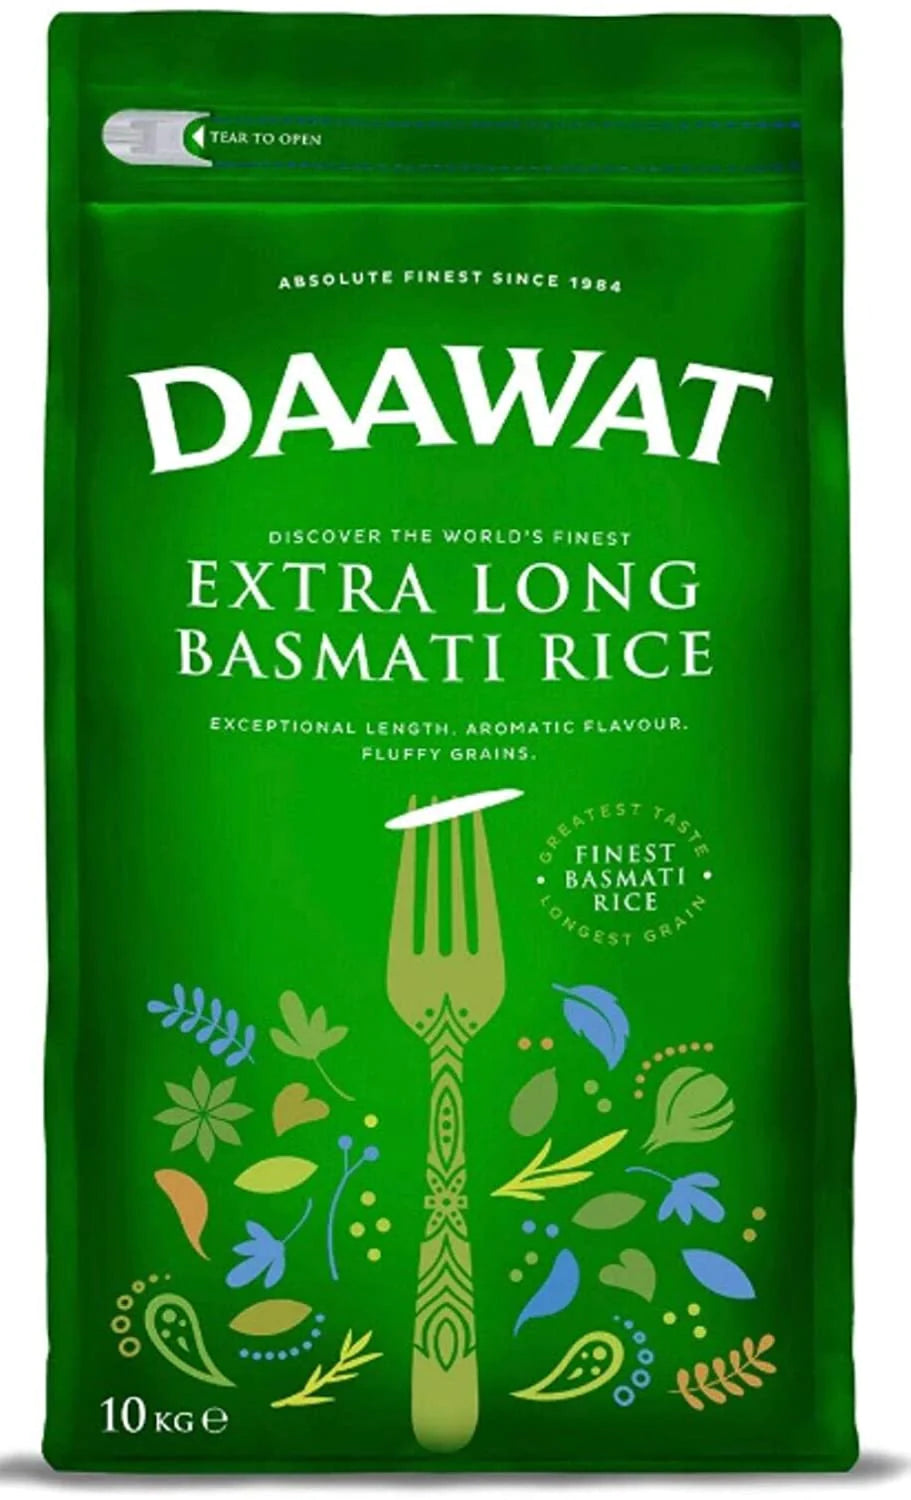 Daawat Extra Long Basmati Rice 10kg @SaveCo Online Ltd